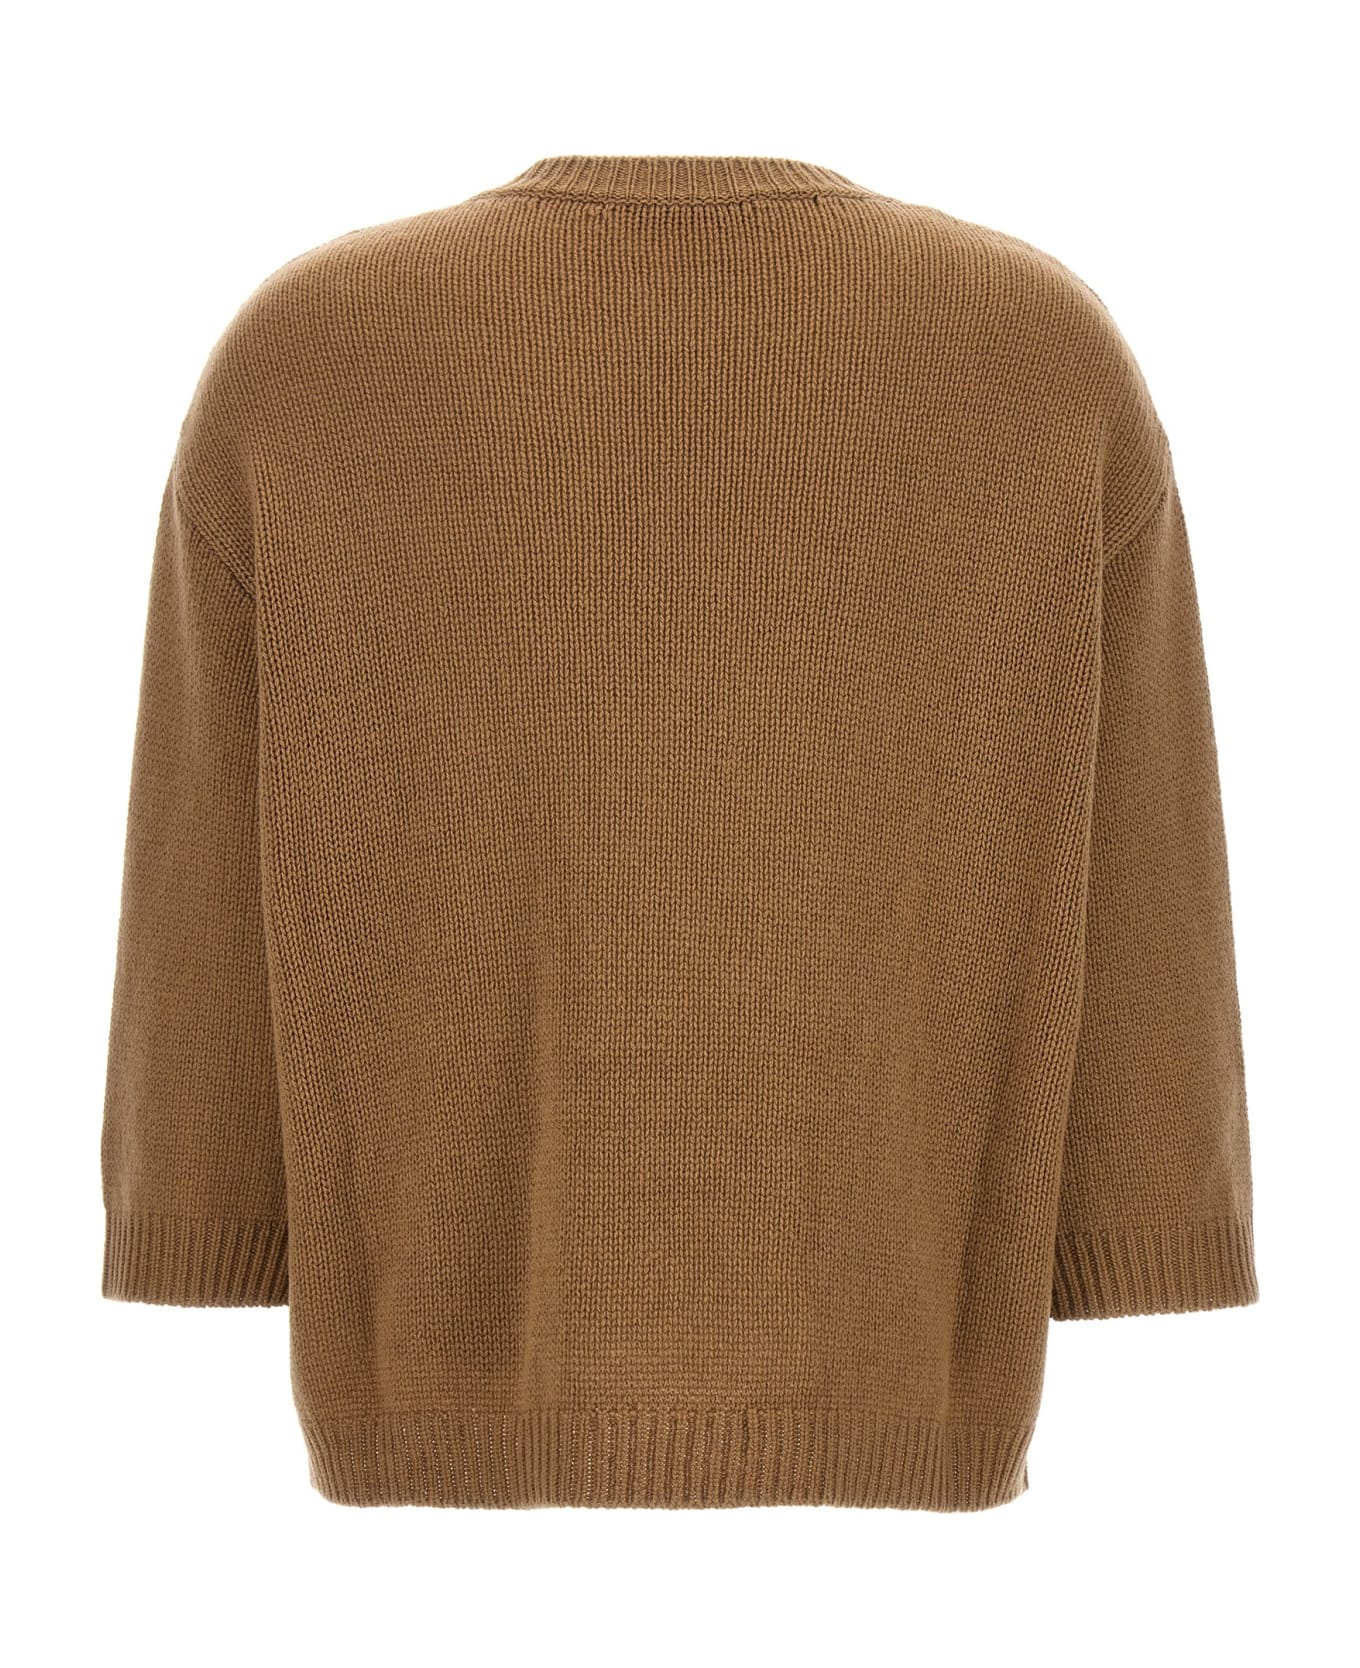 Valentino Sweater With Stud Detail - Beige